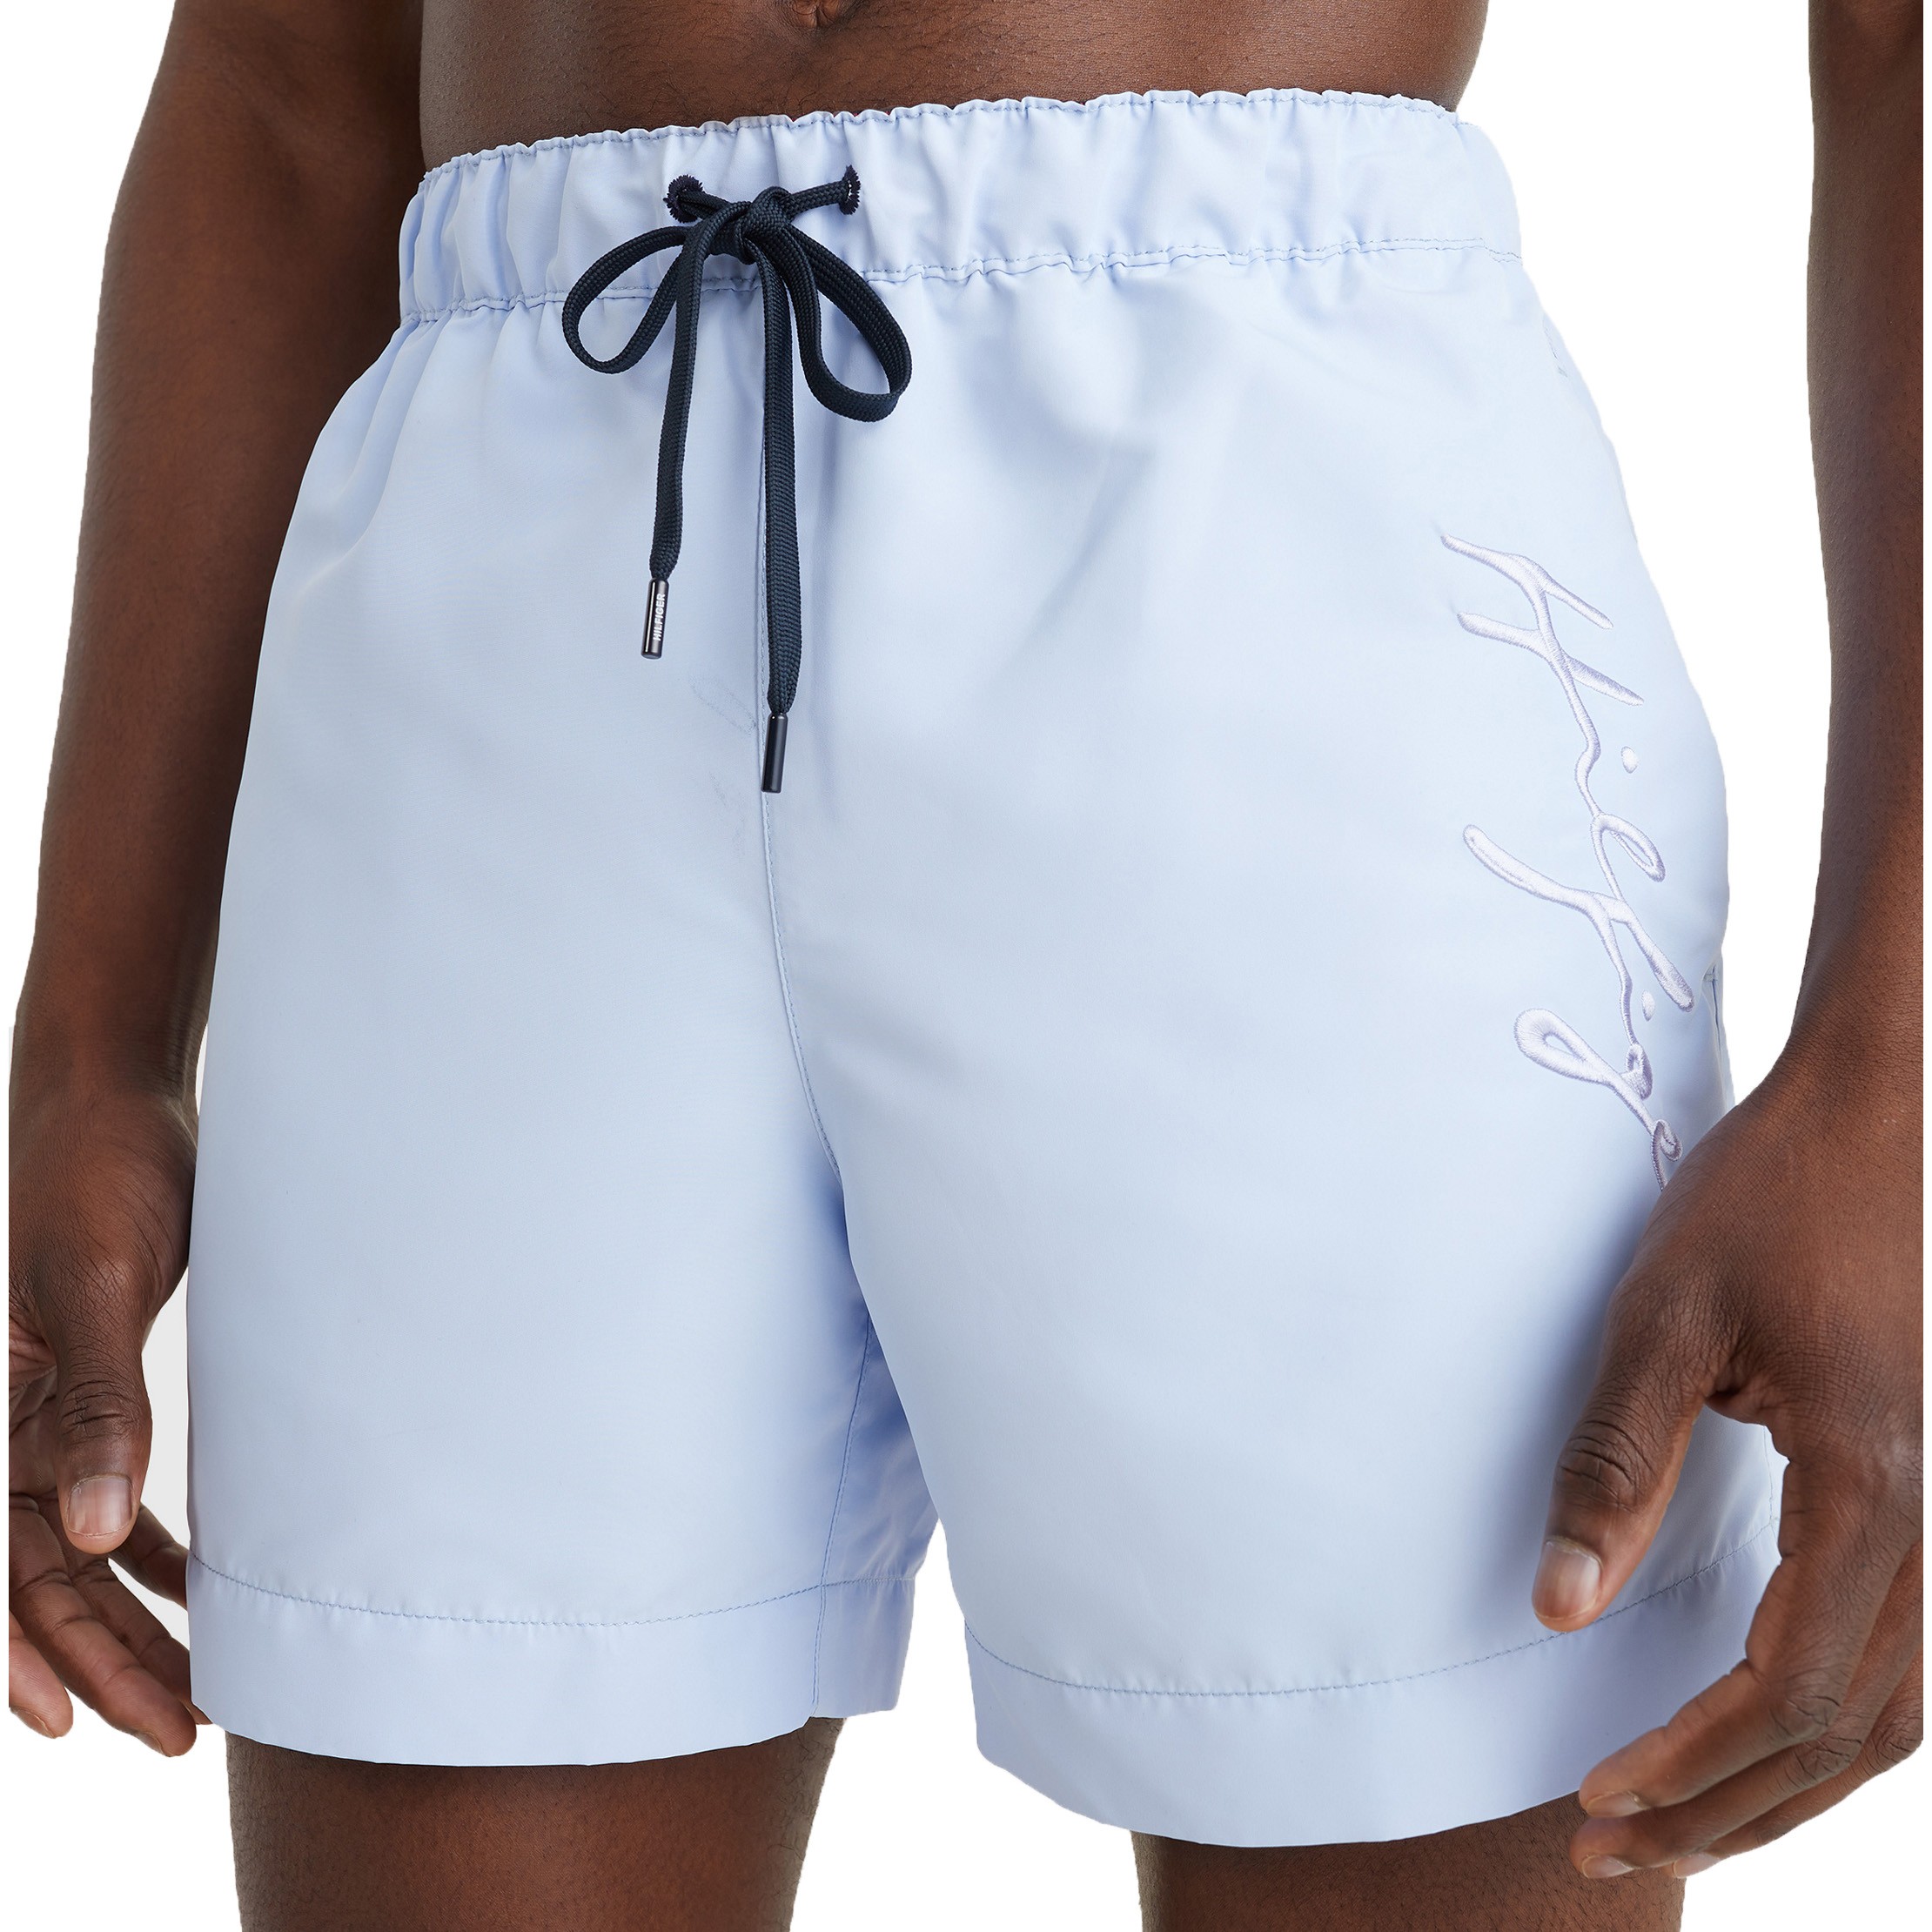 Tommy swim shorts with signature logo - lavender: Swim s...